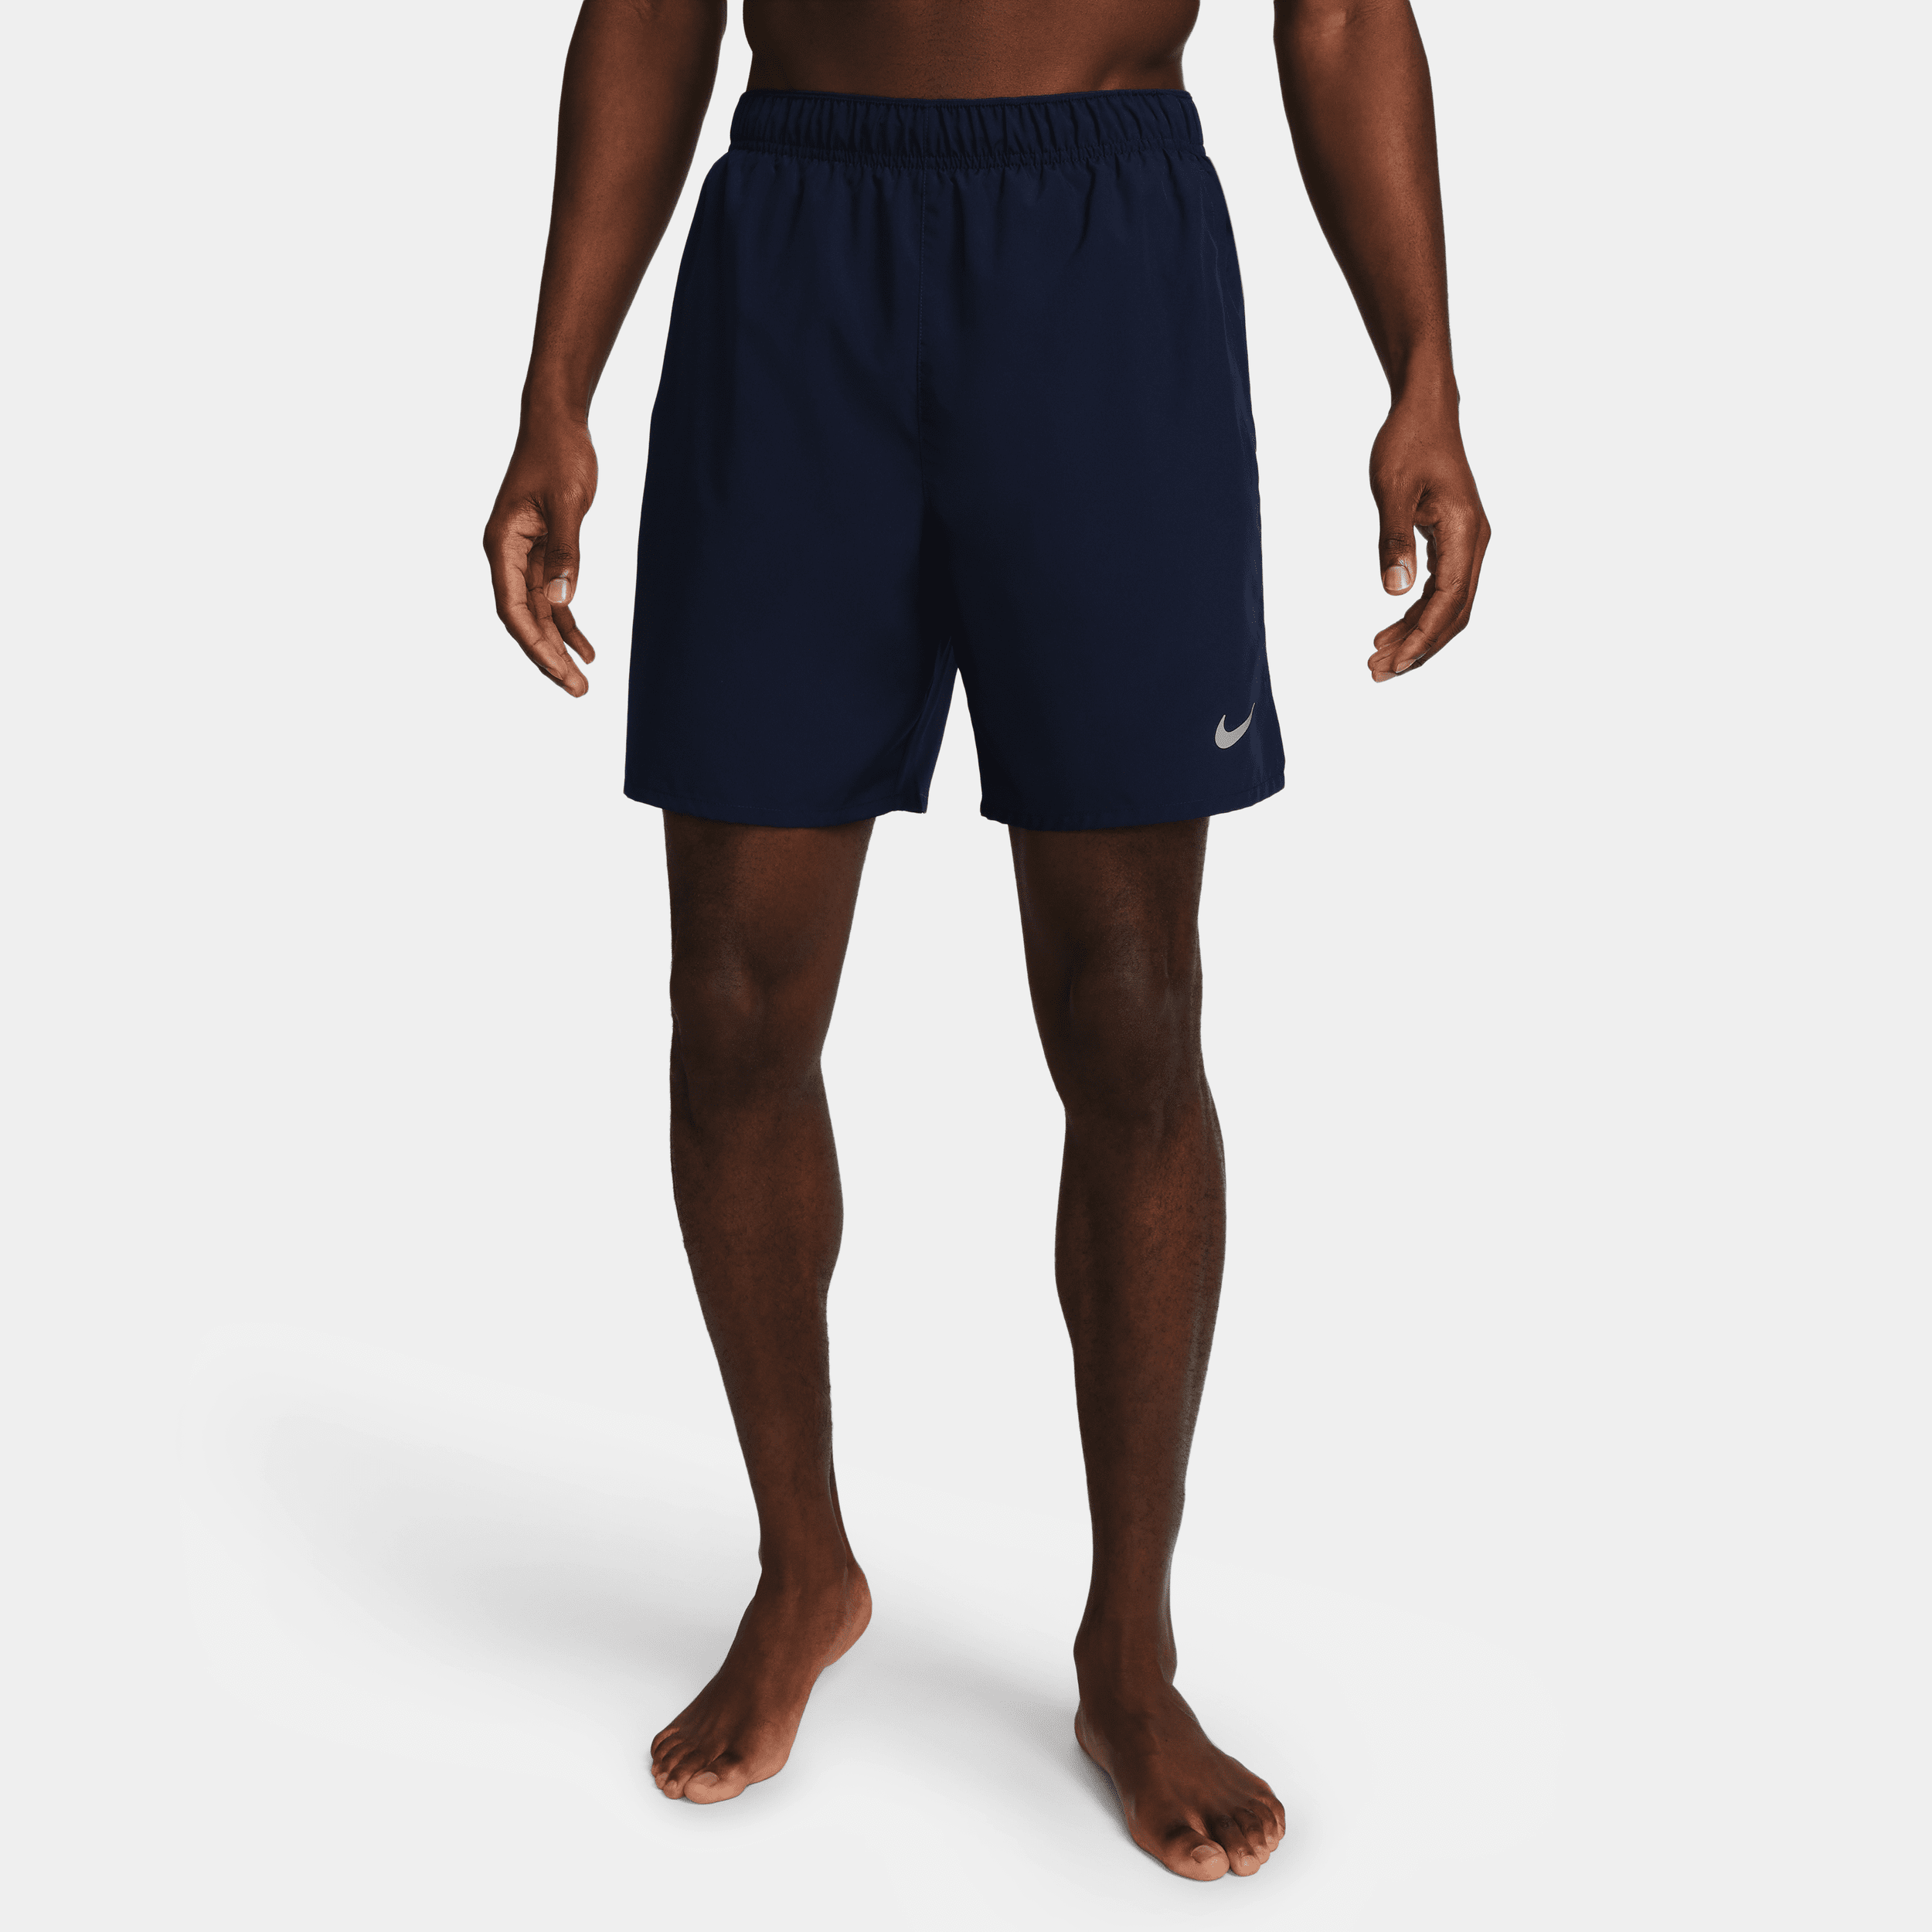 Shorts da running Dri-FIT con slip foderati 18 cm Nike Challenger – Uomo - Blu